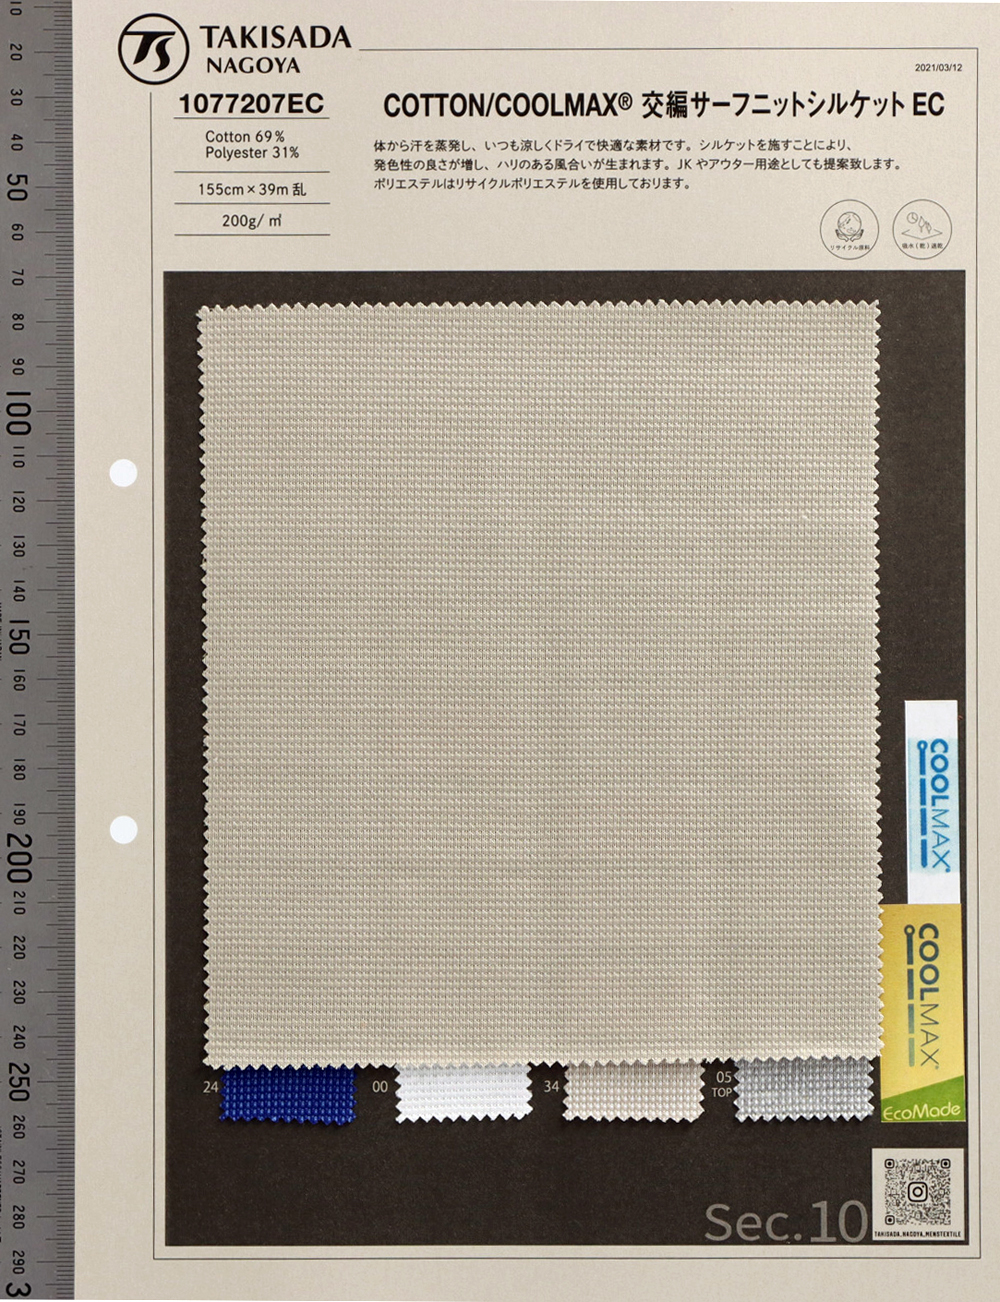 1077207EC COTON / COOLMAX® Cross-knit Surf Knit Mercerisé EC[Fabrication De Textile] Takisada Nagoya